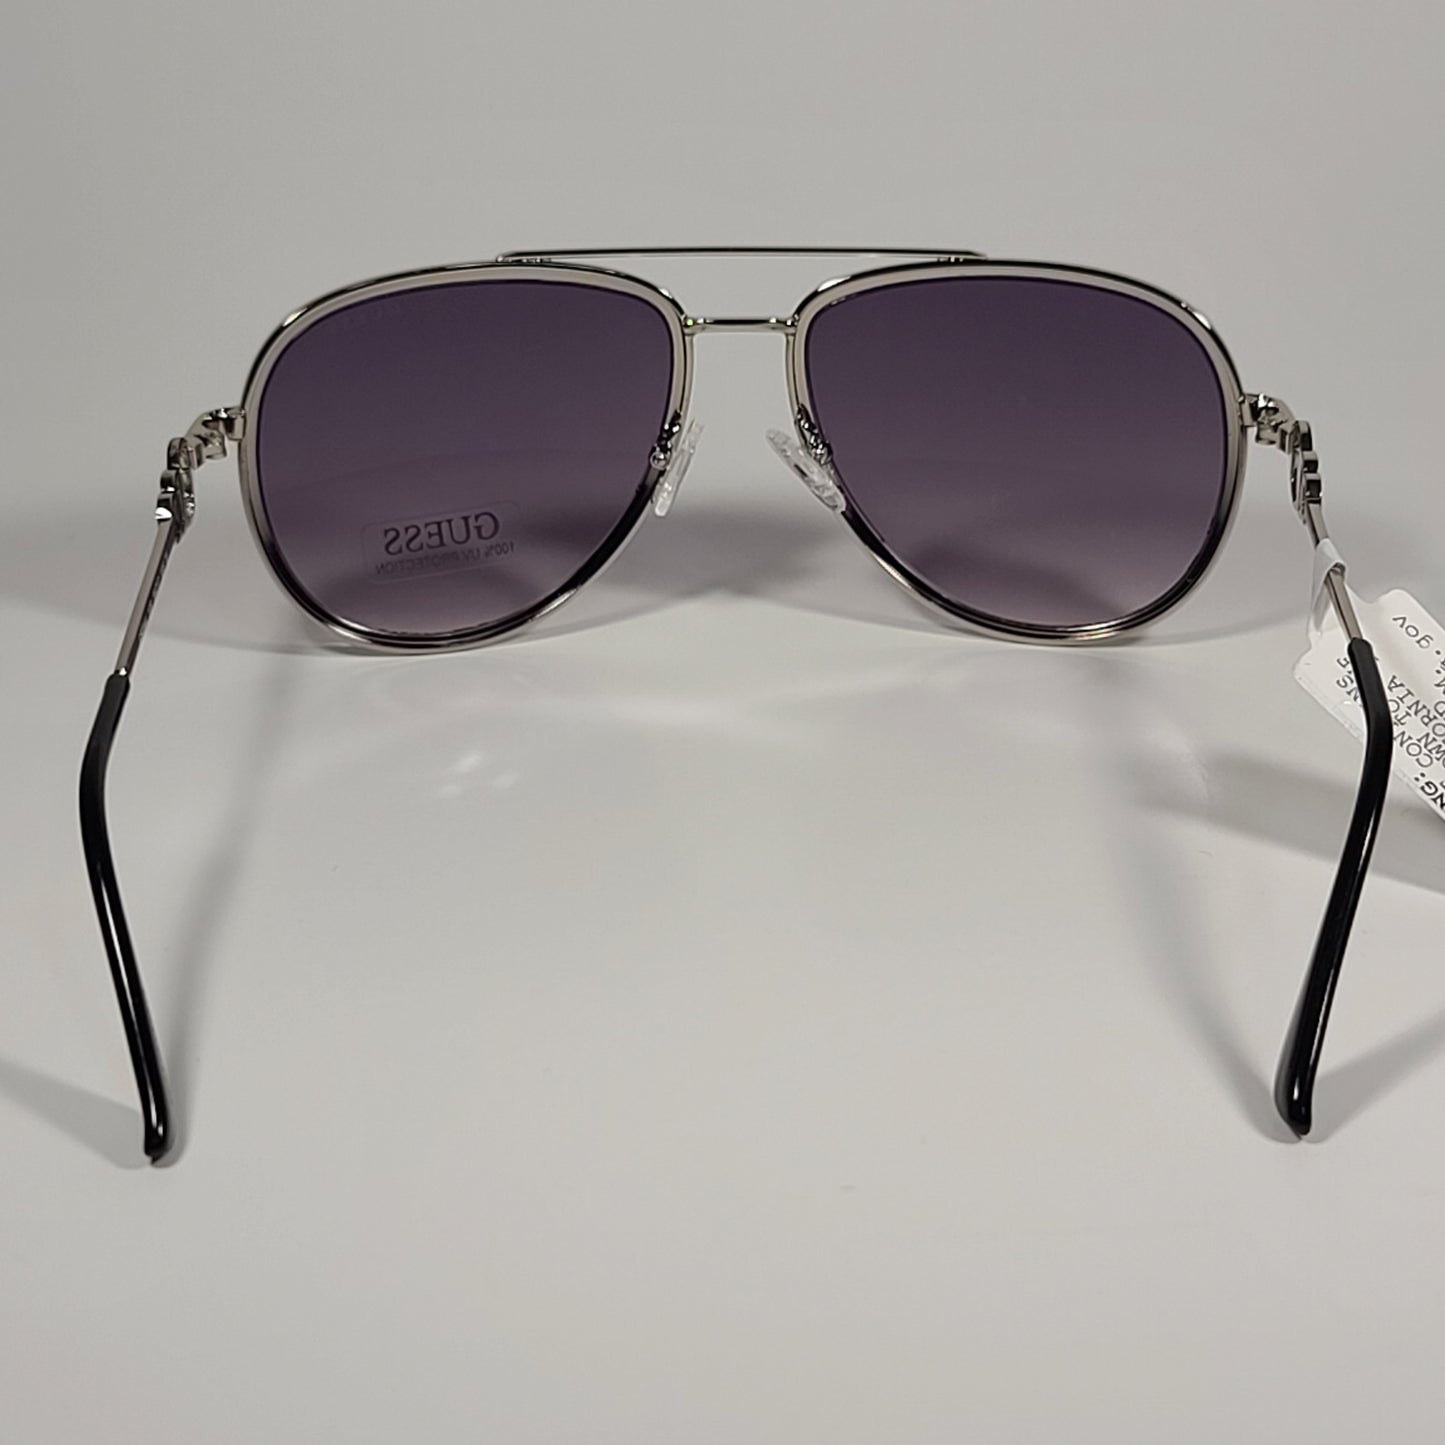 Guess Aviator Pilot Sunglasses Silver Metal Gray Smoke Gradient Lens GF0344 10B - Sunglasses